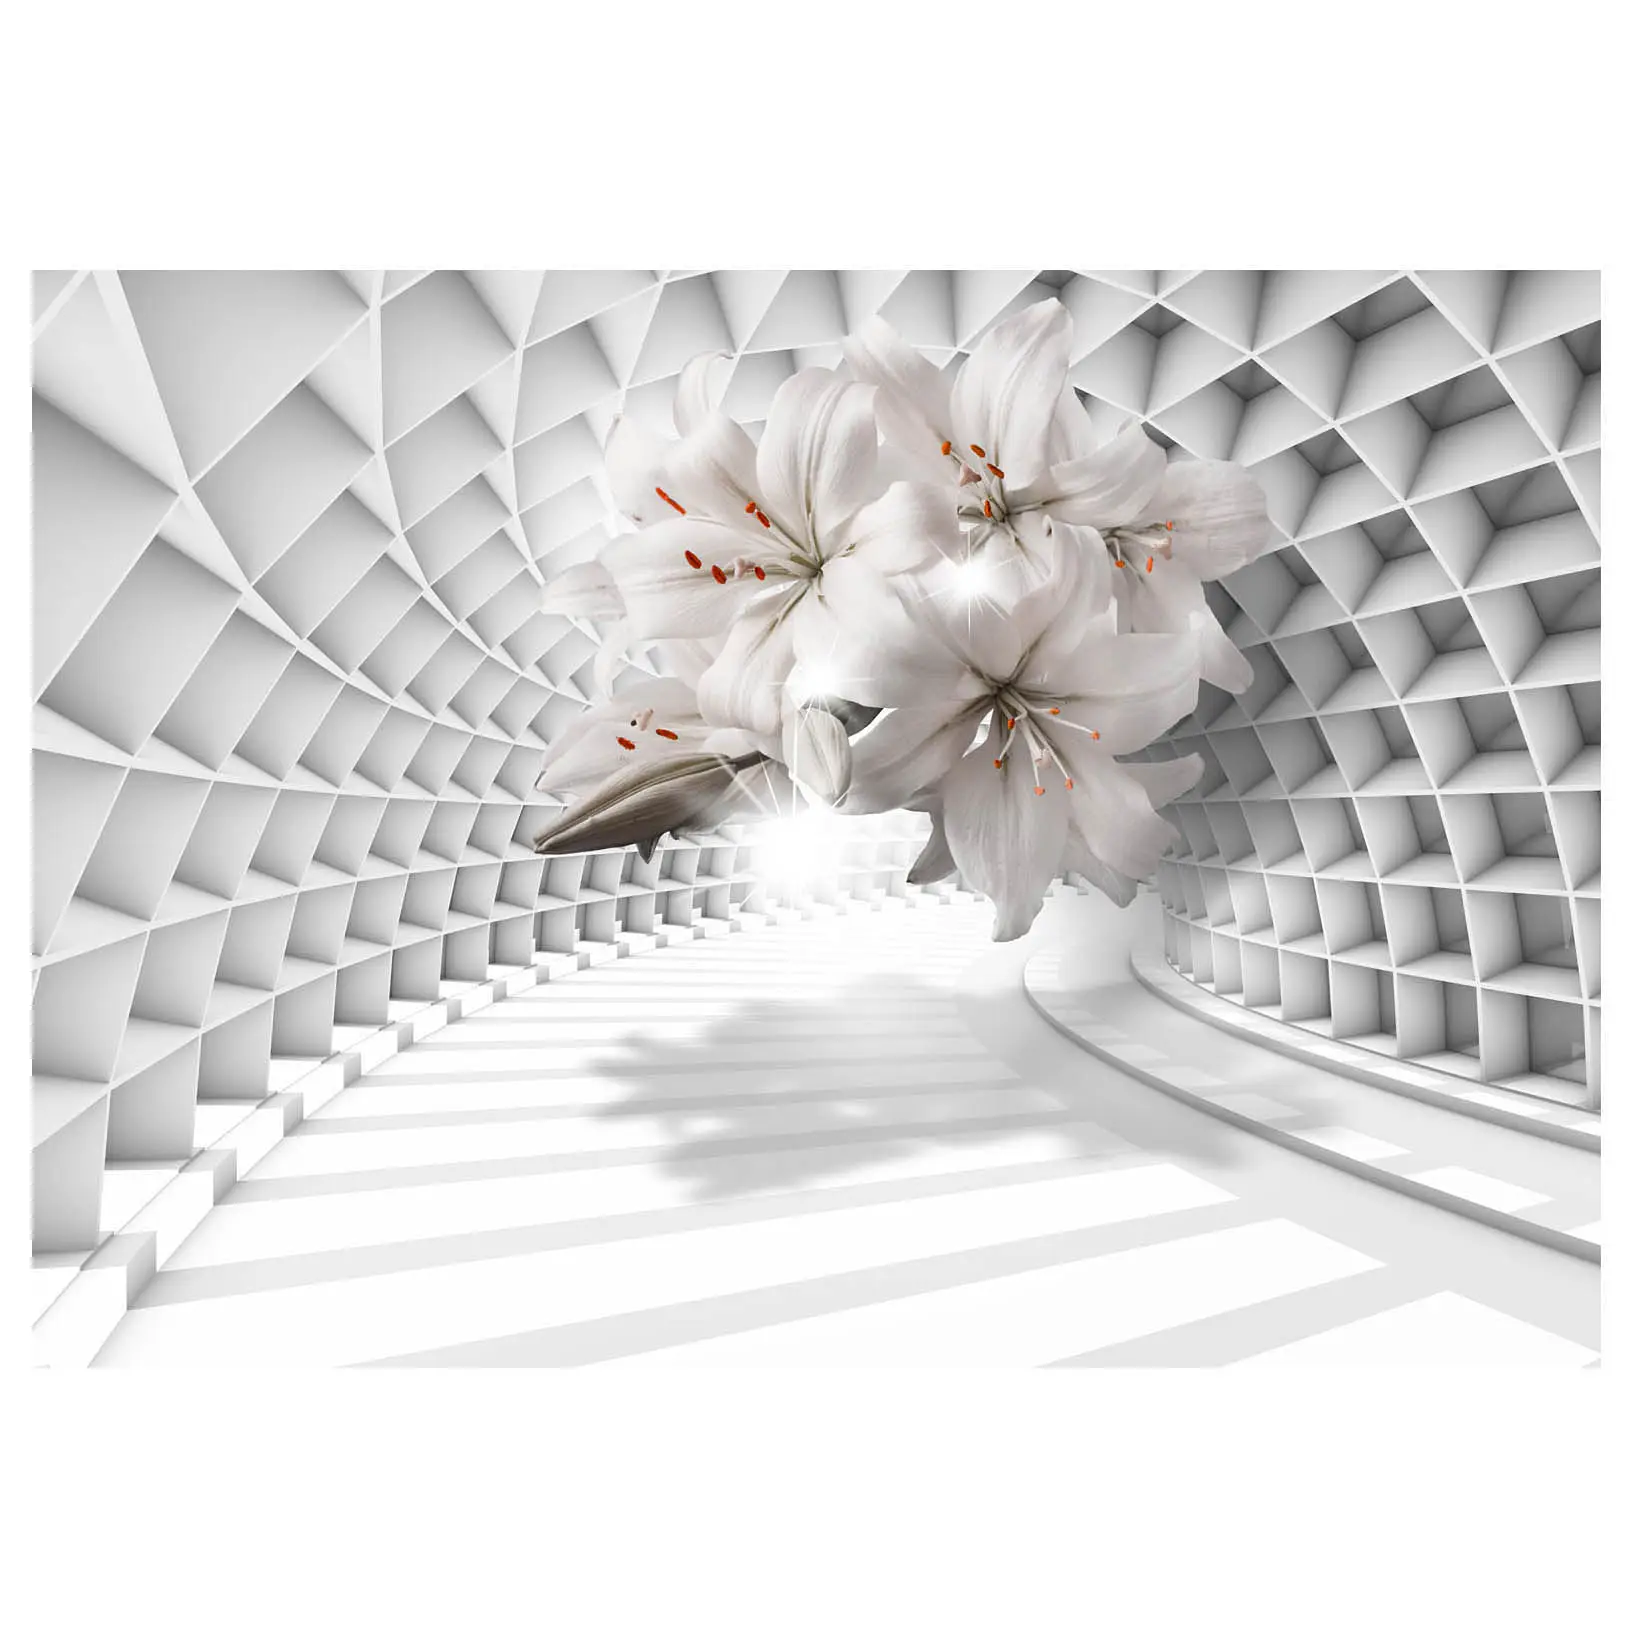 Fototapete Flowers in the Tunnel